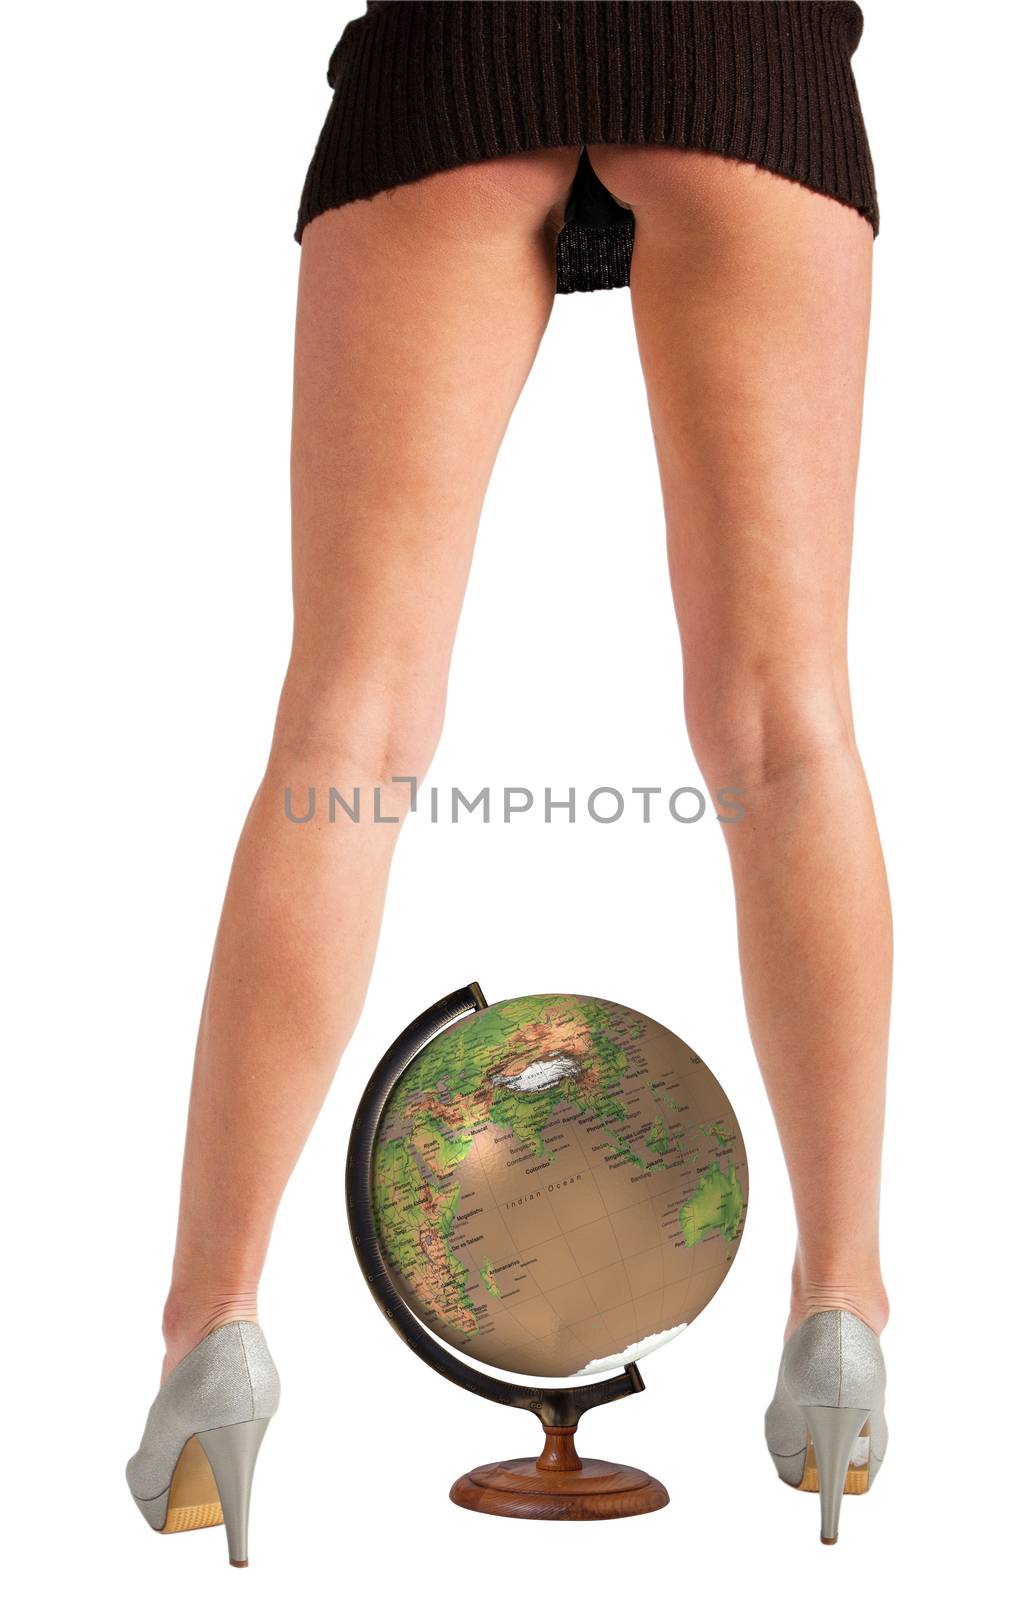 The slim legs and globe by raddnatt